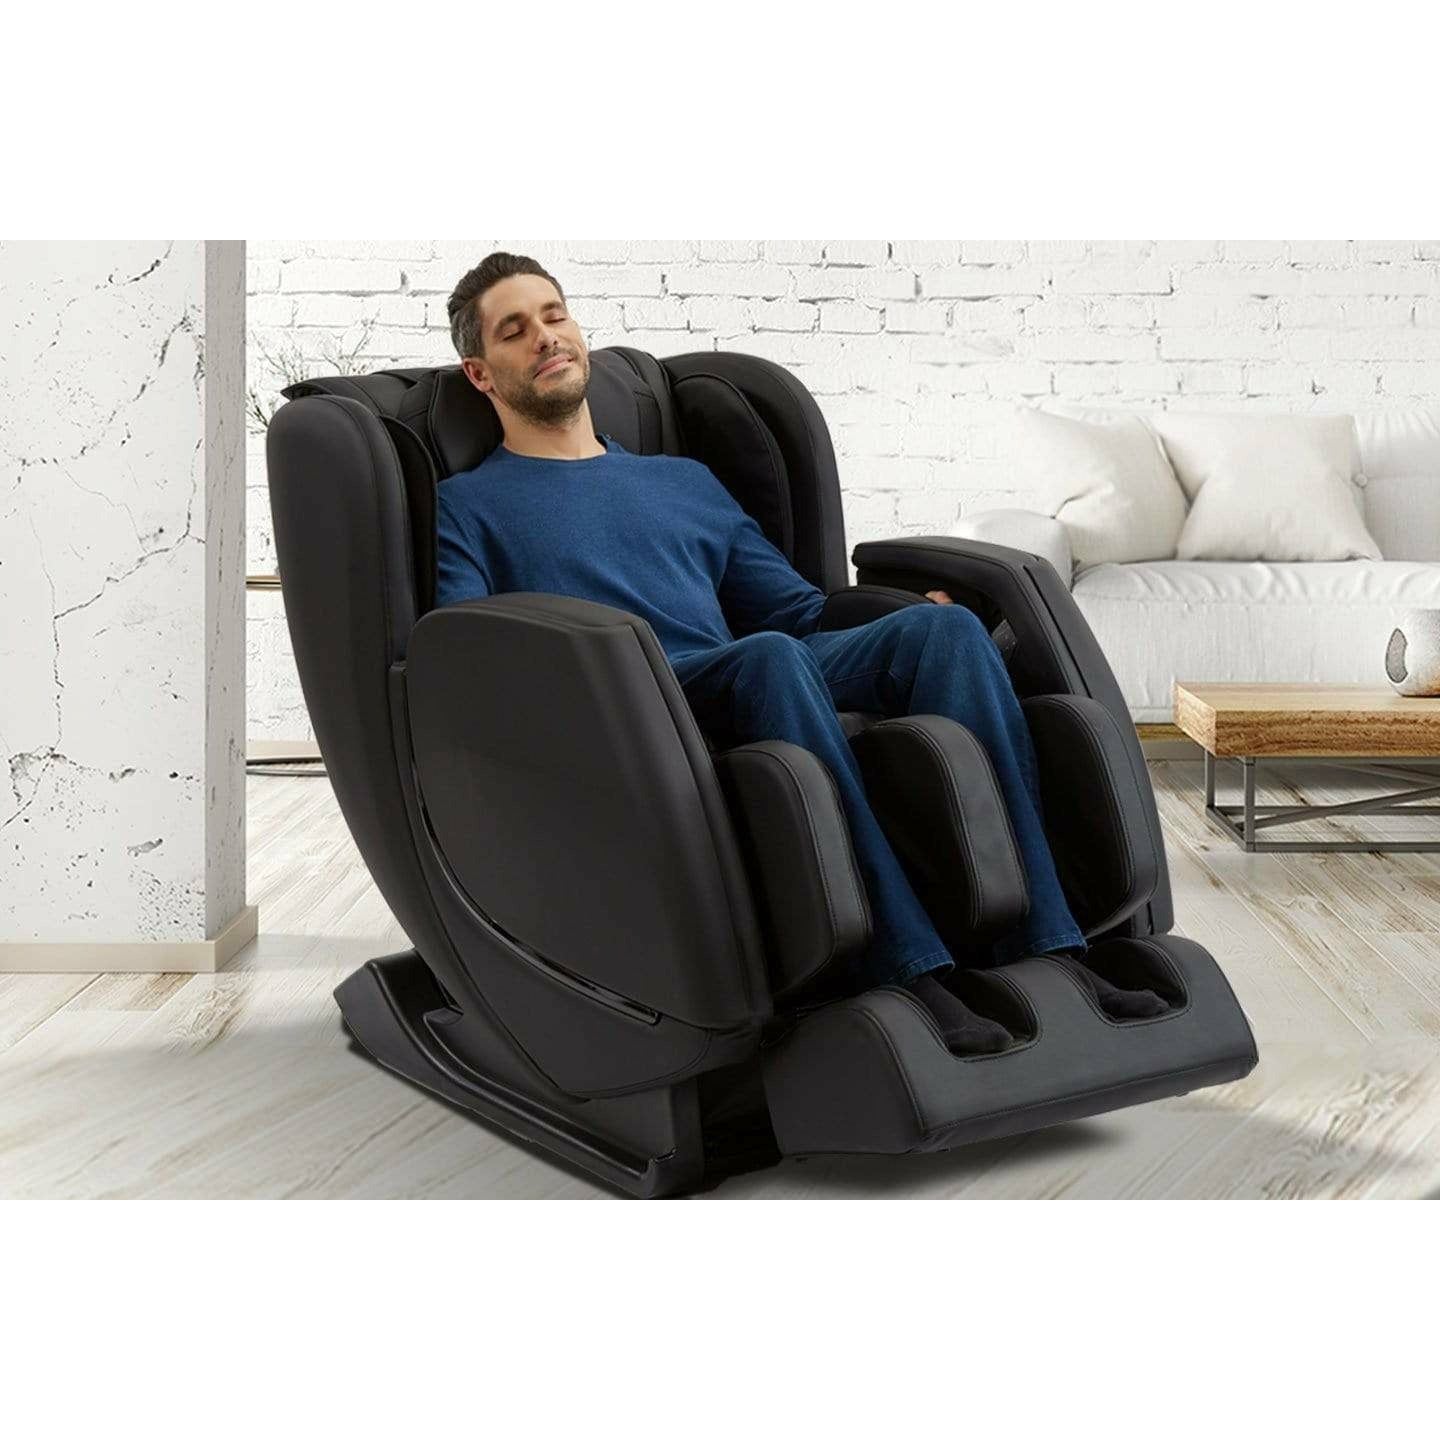 Sharper Image Revival Zero Gravity L-track Massage Chair